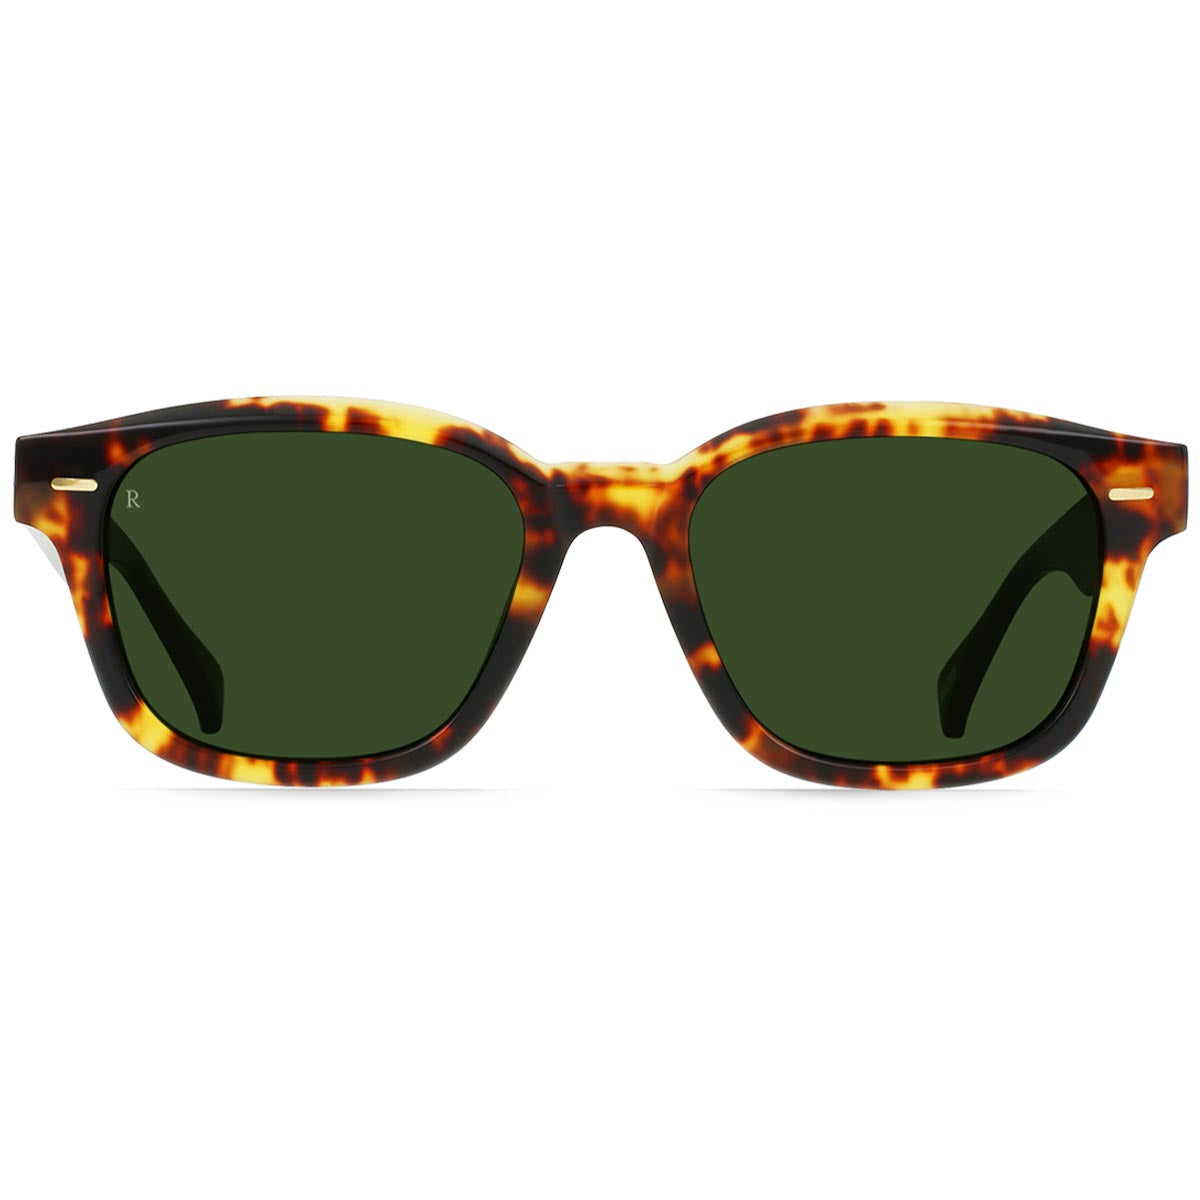 Raen Carby 53 Sunglasses - Ristetto Tortoise/Bottle Green image 2